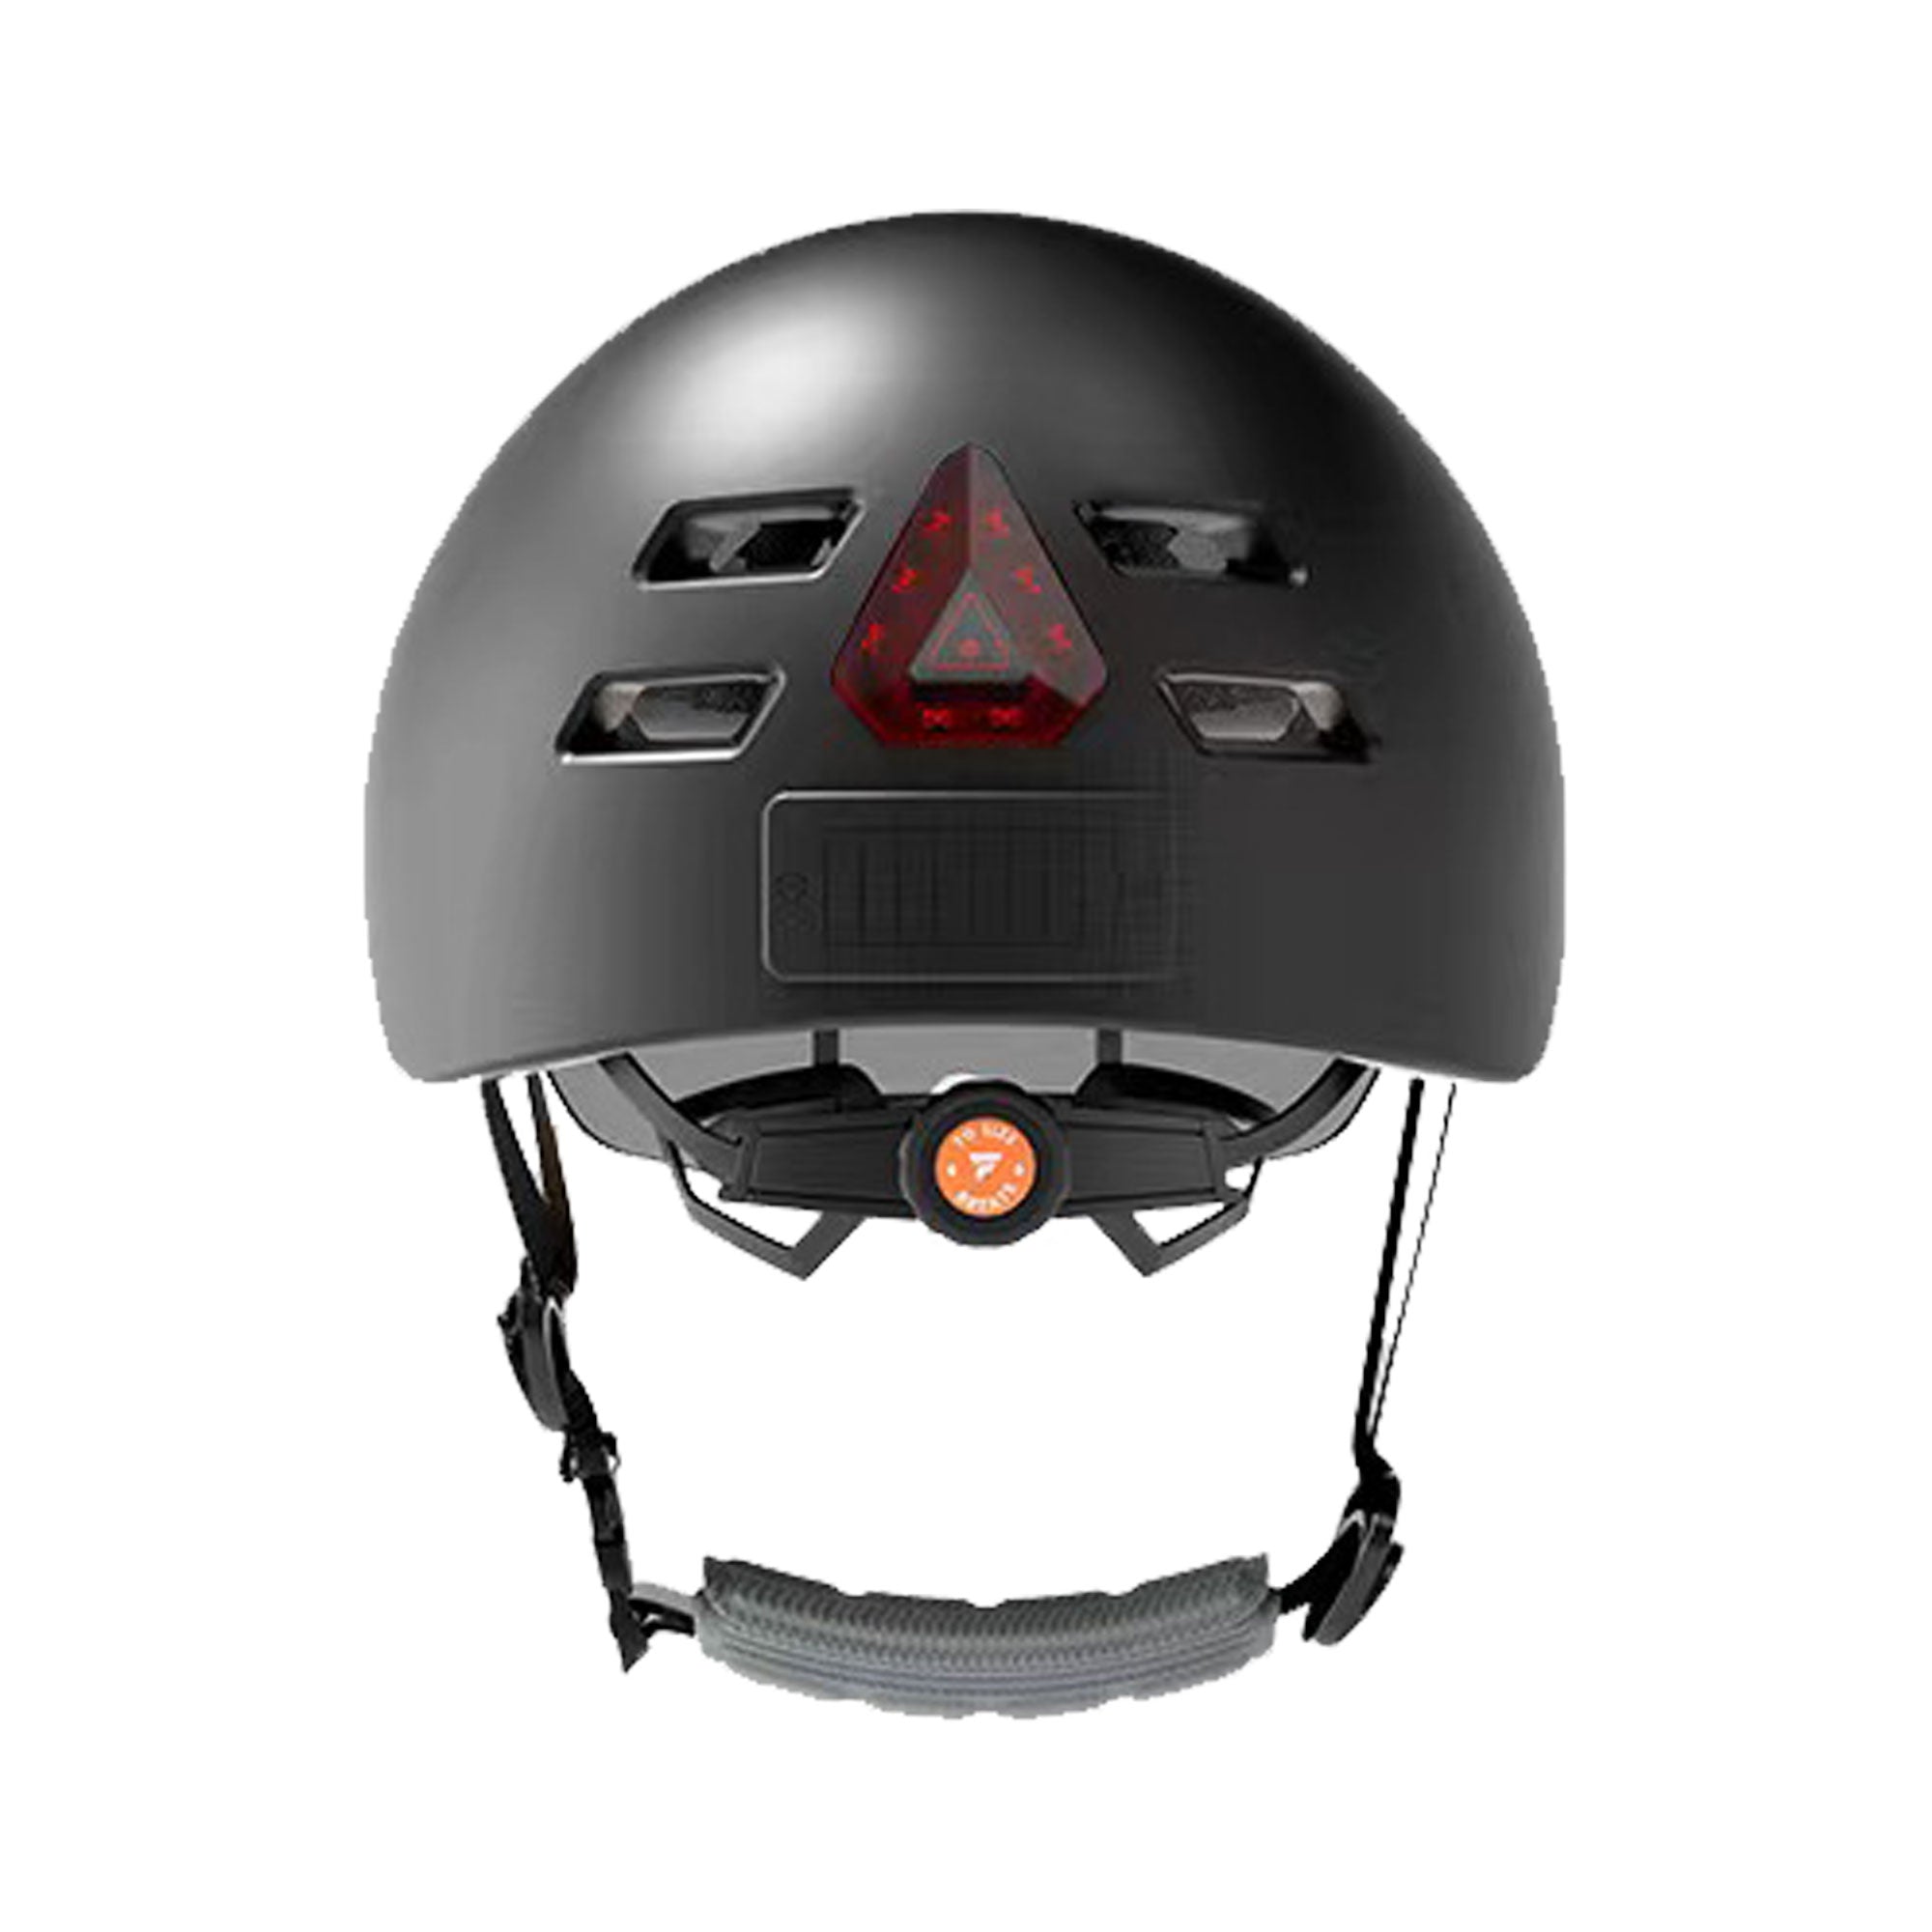 Smart E-Bike Helmet with Camera & Warning Light